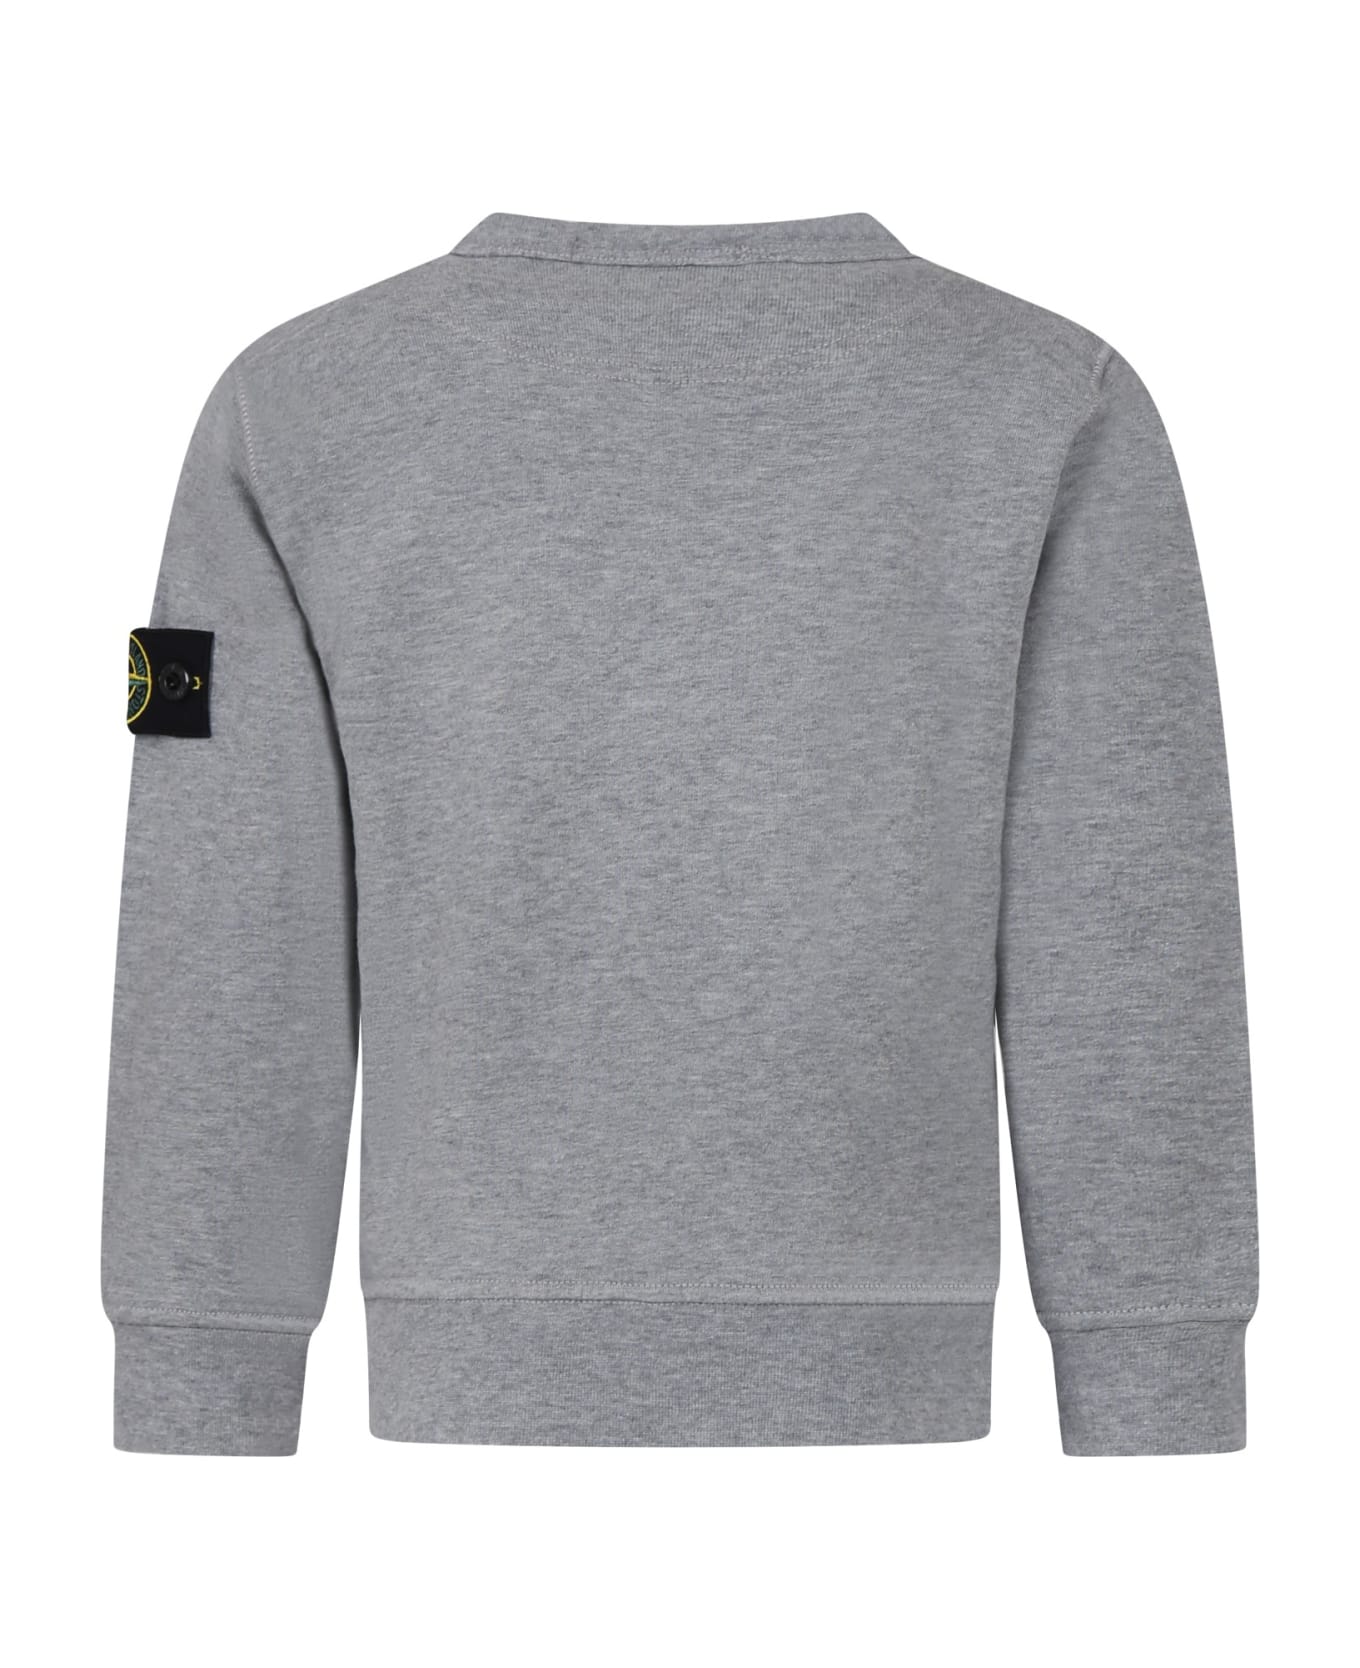 Stone Island Junior Grey Sweatshirt For Boy With Iconic Logo - Grey melange